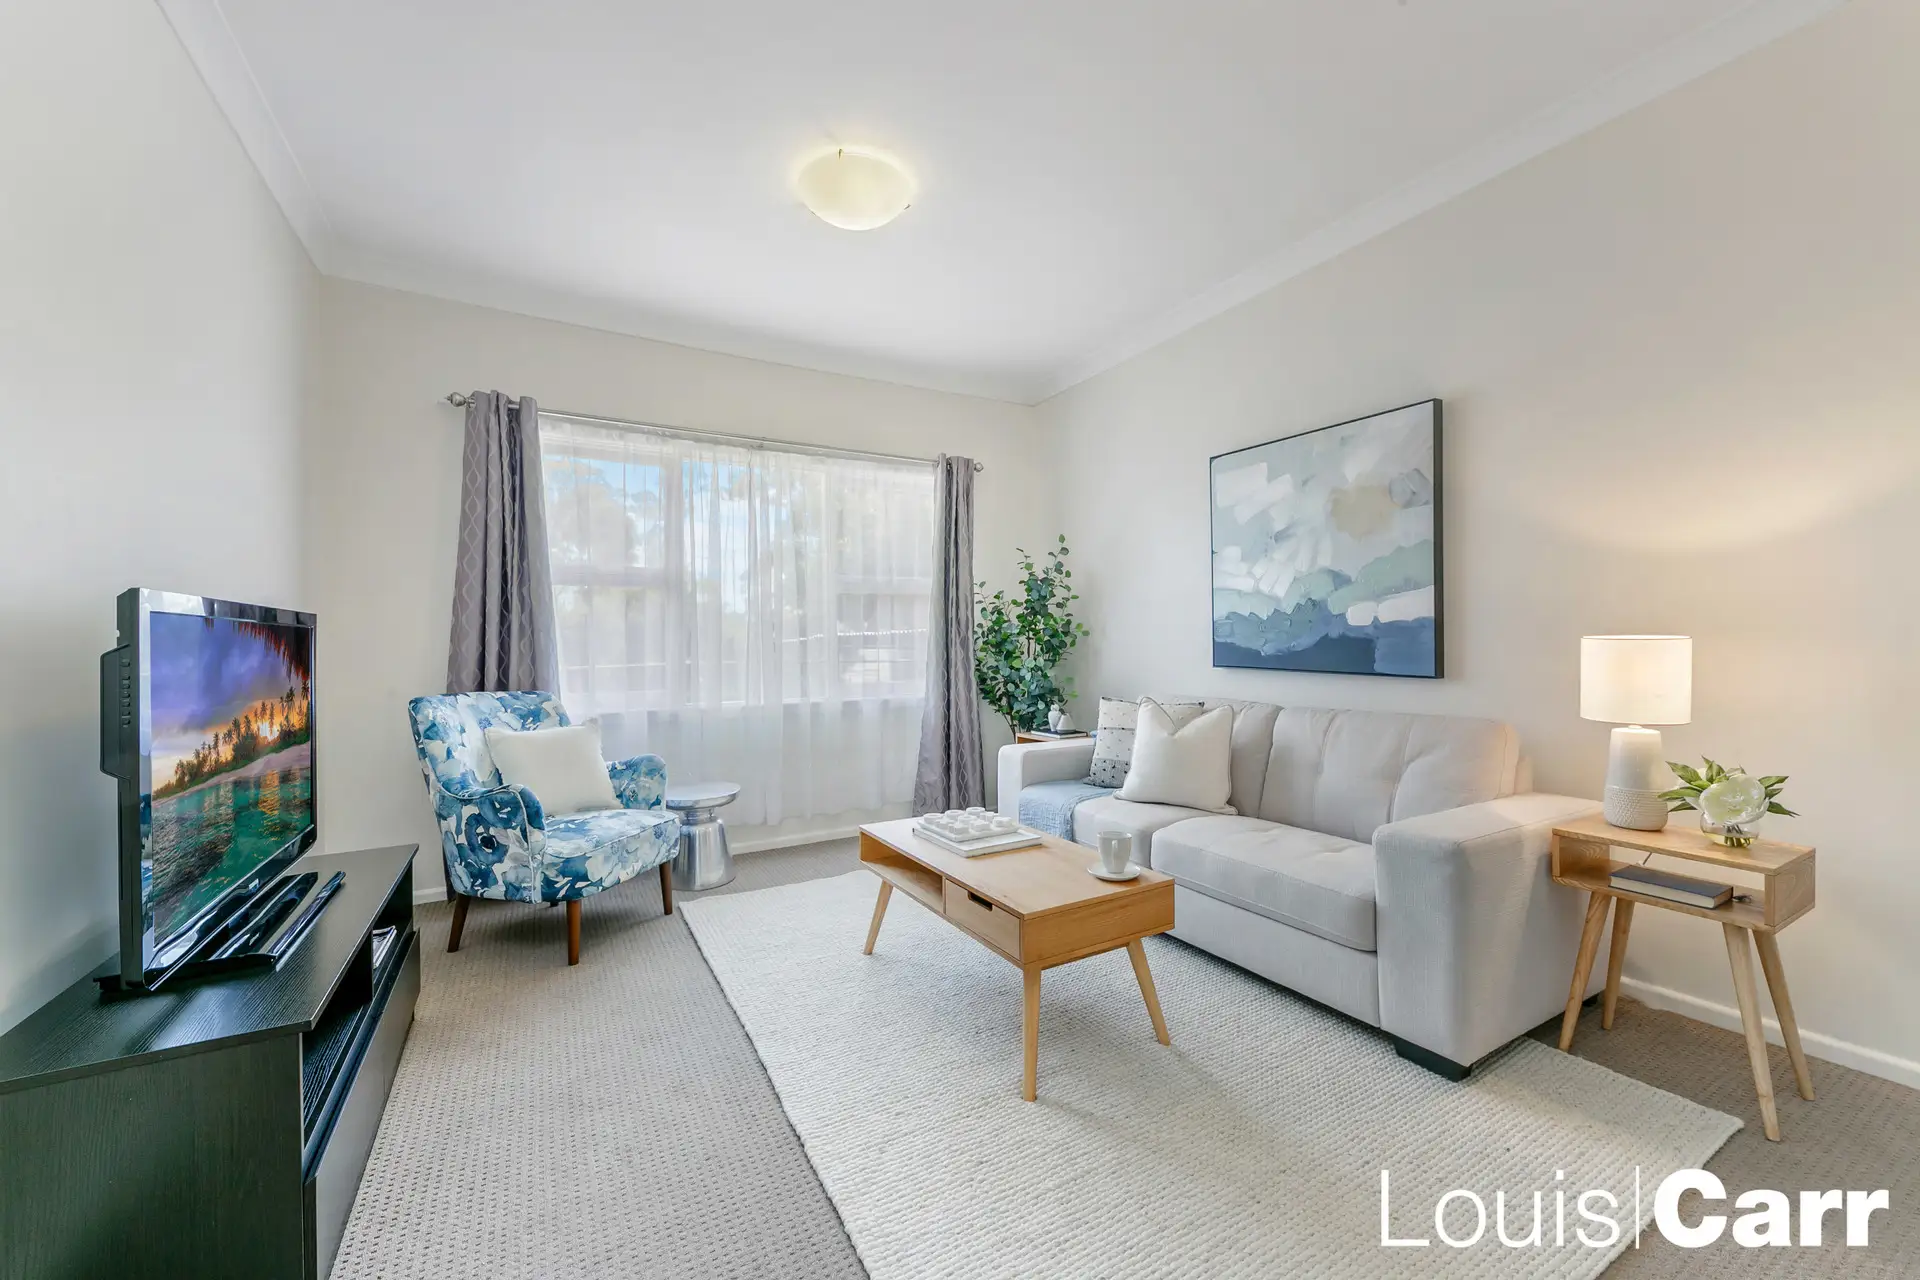 3 Koorool Avenue, Lalor Park Sold by Louis Carr Real Estate - image 4